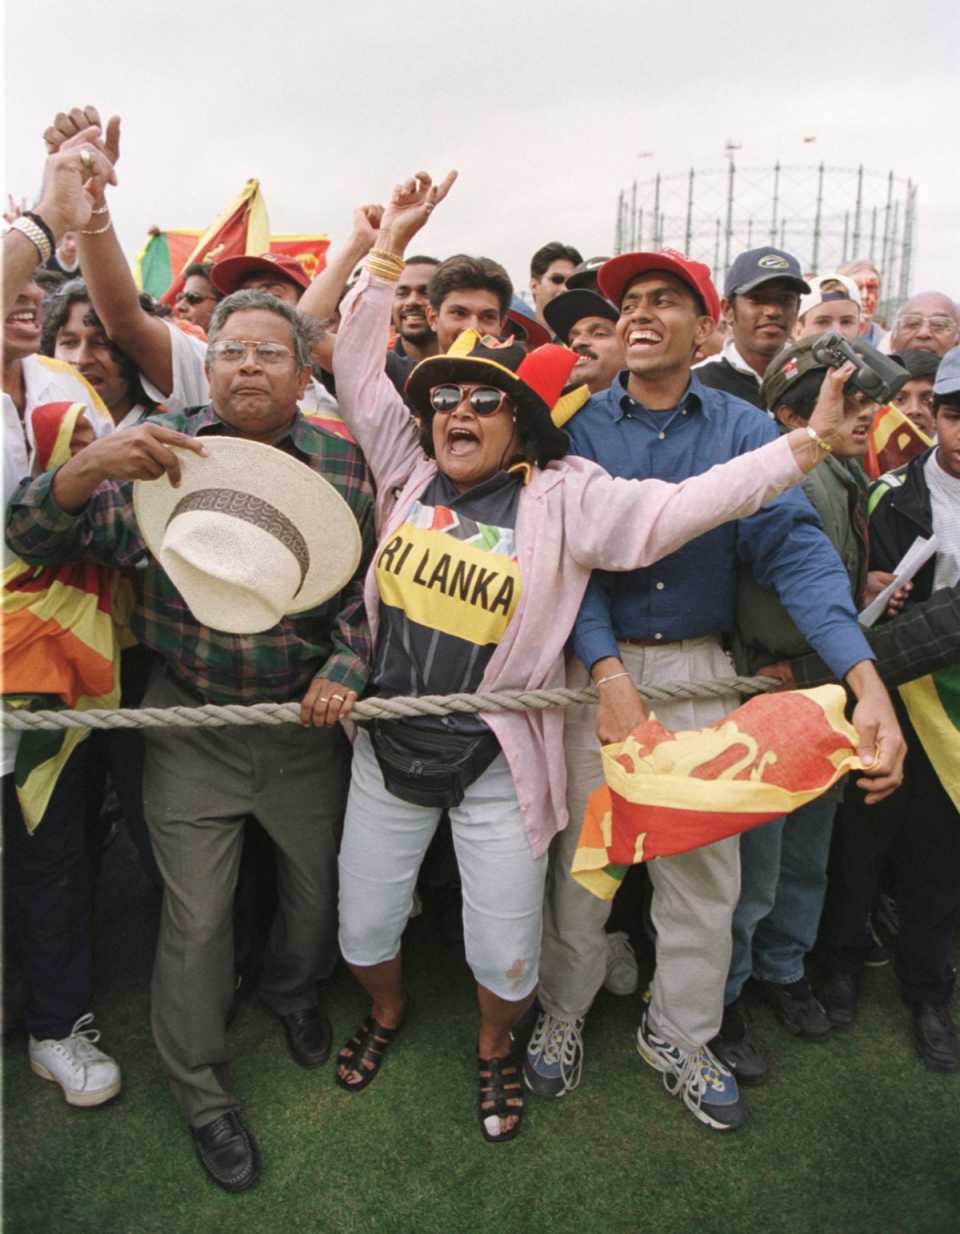 Sri Lanka fans celebrate their team's win